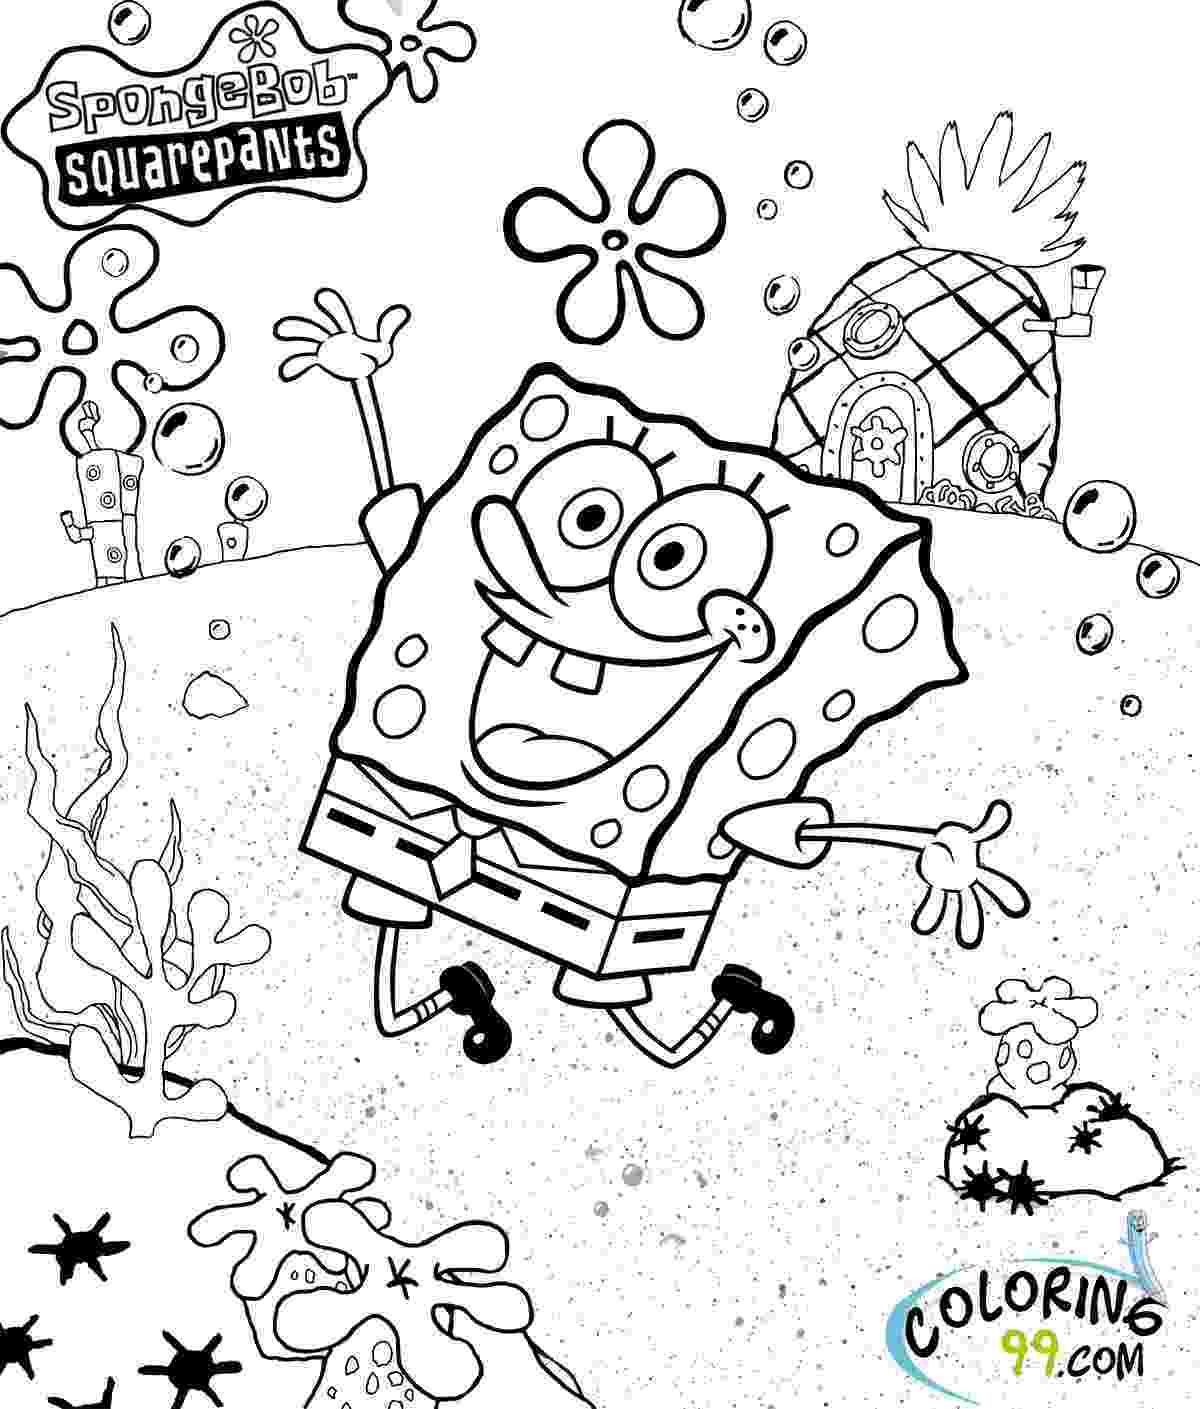 spongebob squarepants coloring page free printable spongebob squarepants coloring pages for kids squarepants page coloring spongebob 